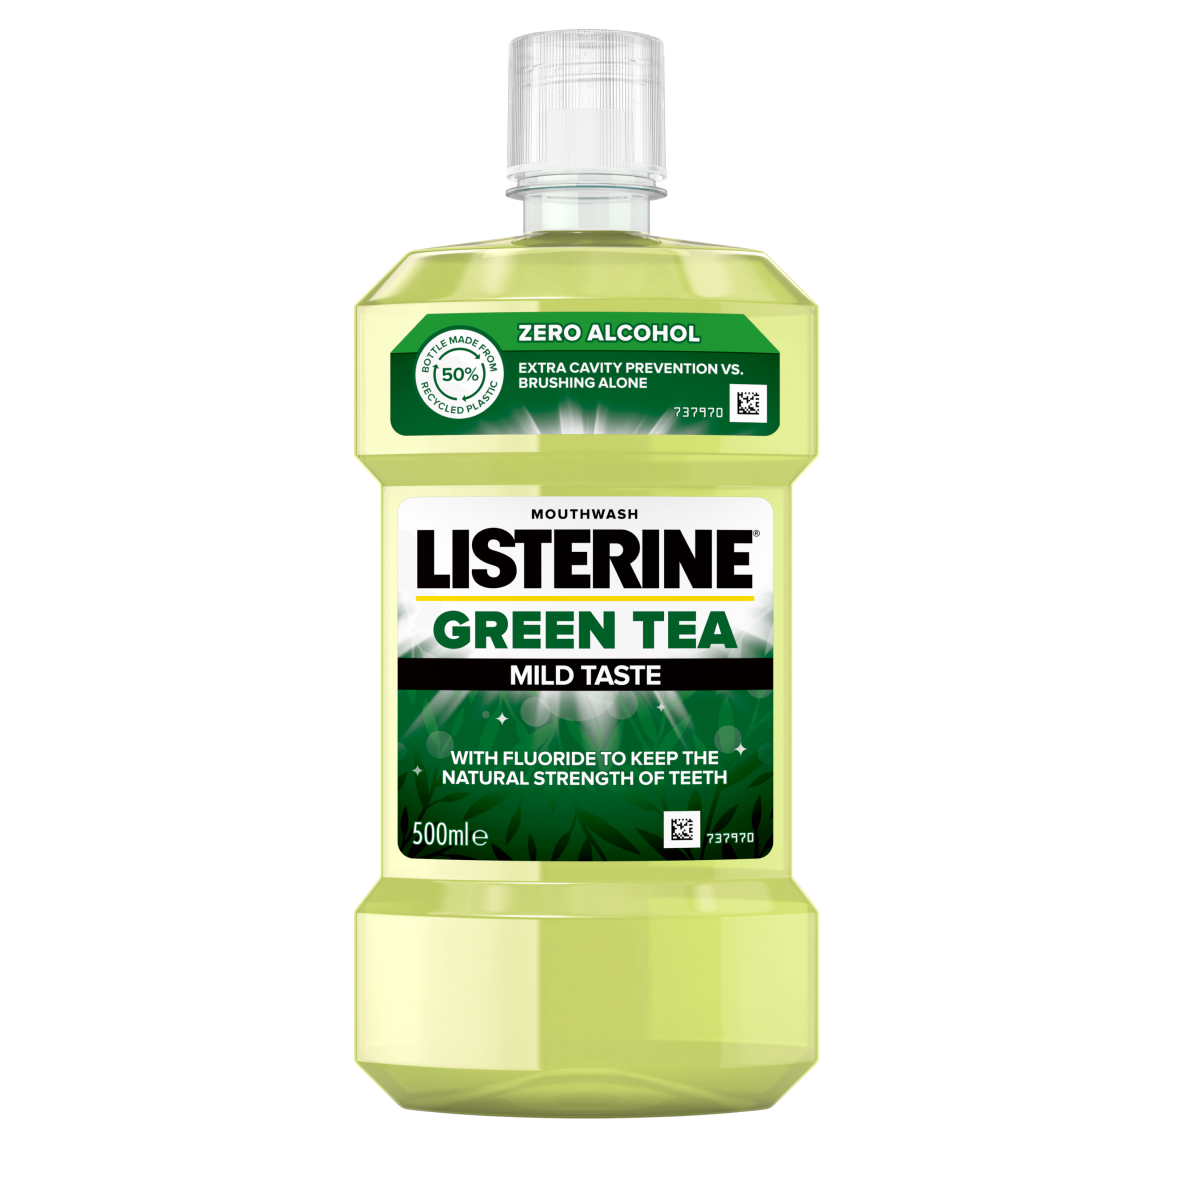 Listerine Green Tea Mild Taste 500 ml termékfotó, extra cavity prevention vs. brushing alone és with fluoride to keep the natural strength of teeth feliratokkal